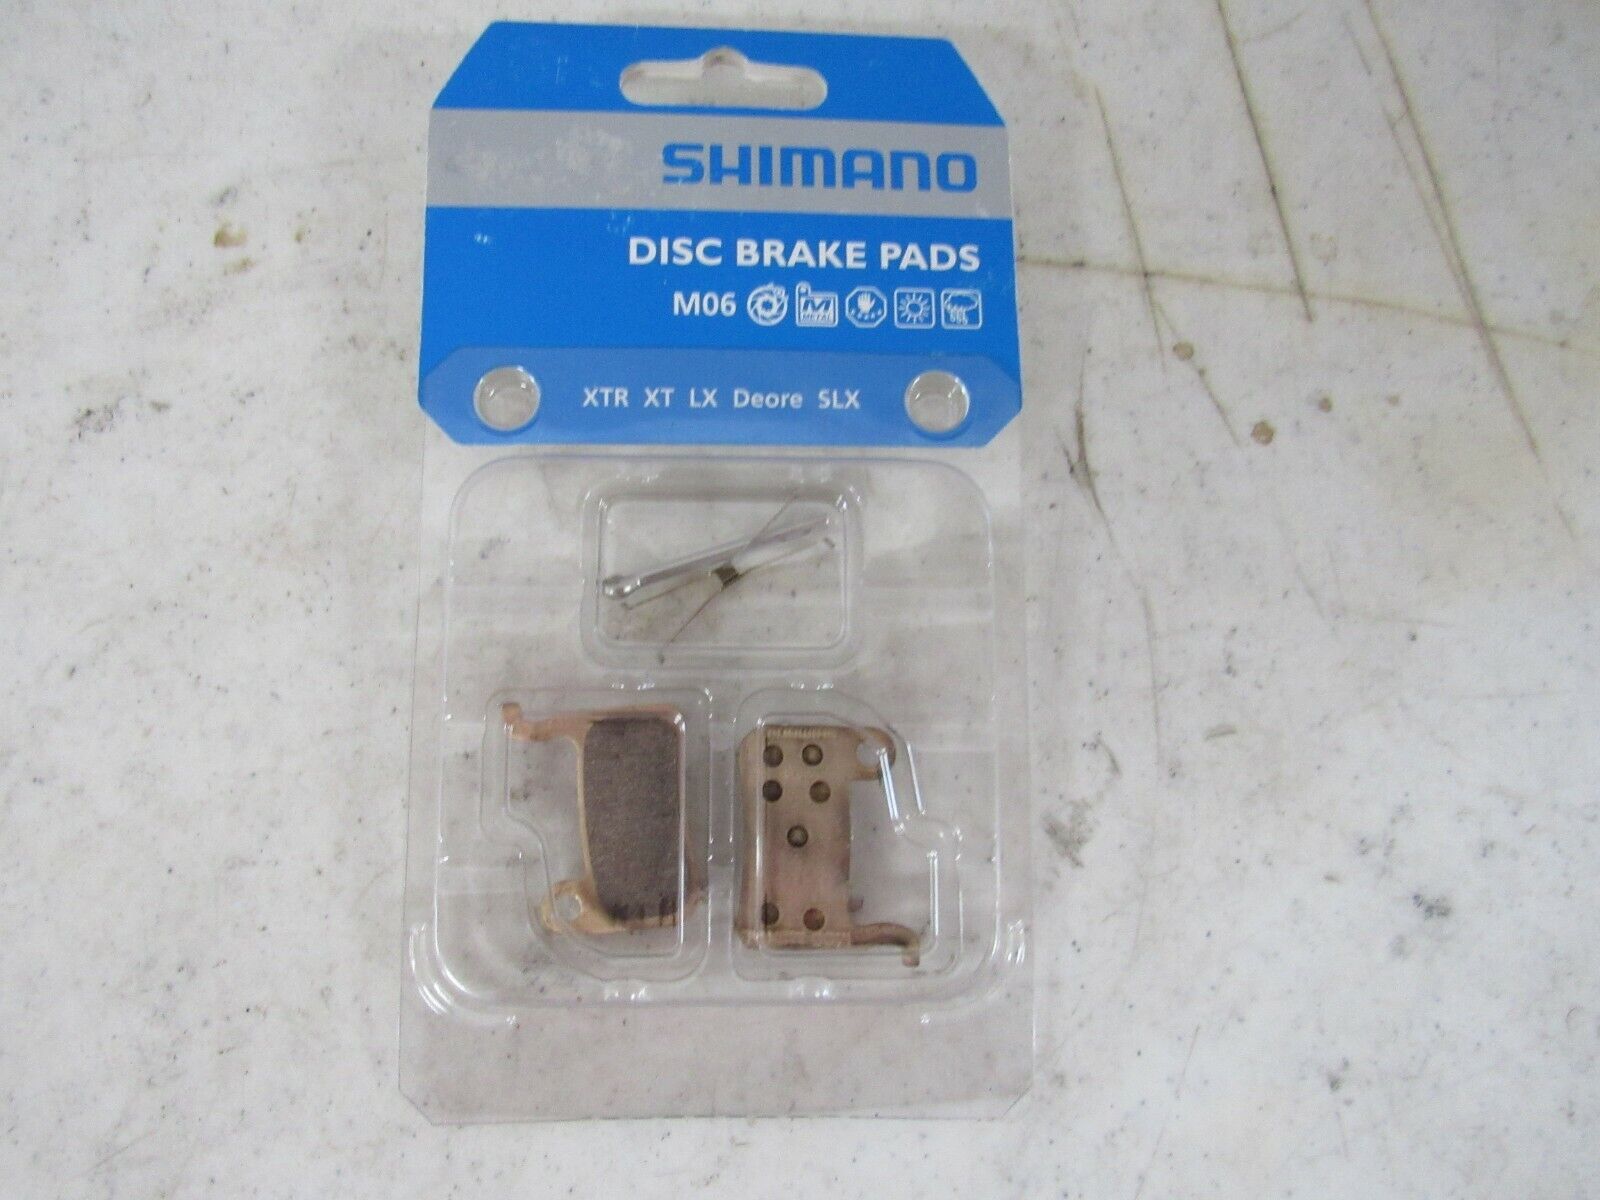 Shimano XTR XT LX DEORE SLX Replacement M06 Metal Disc Brake Pad